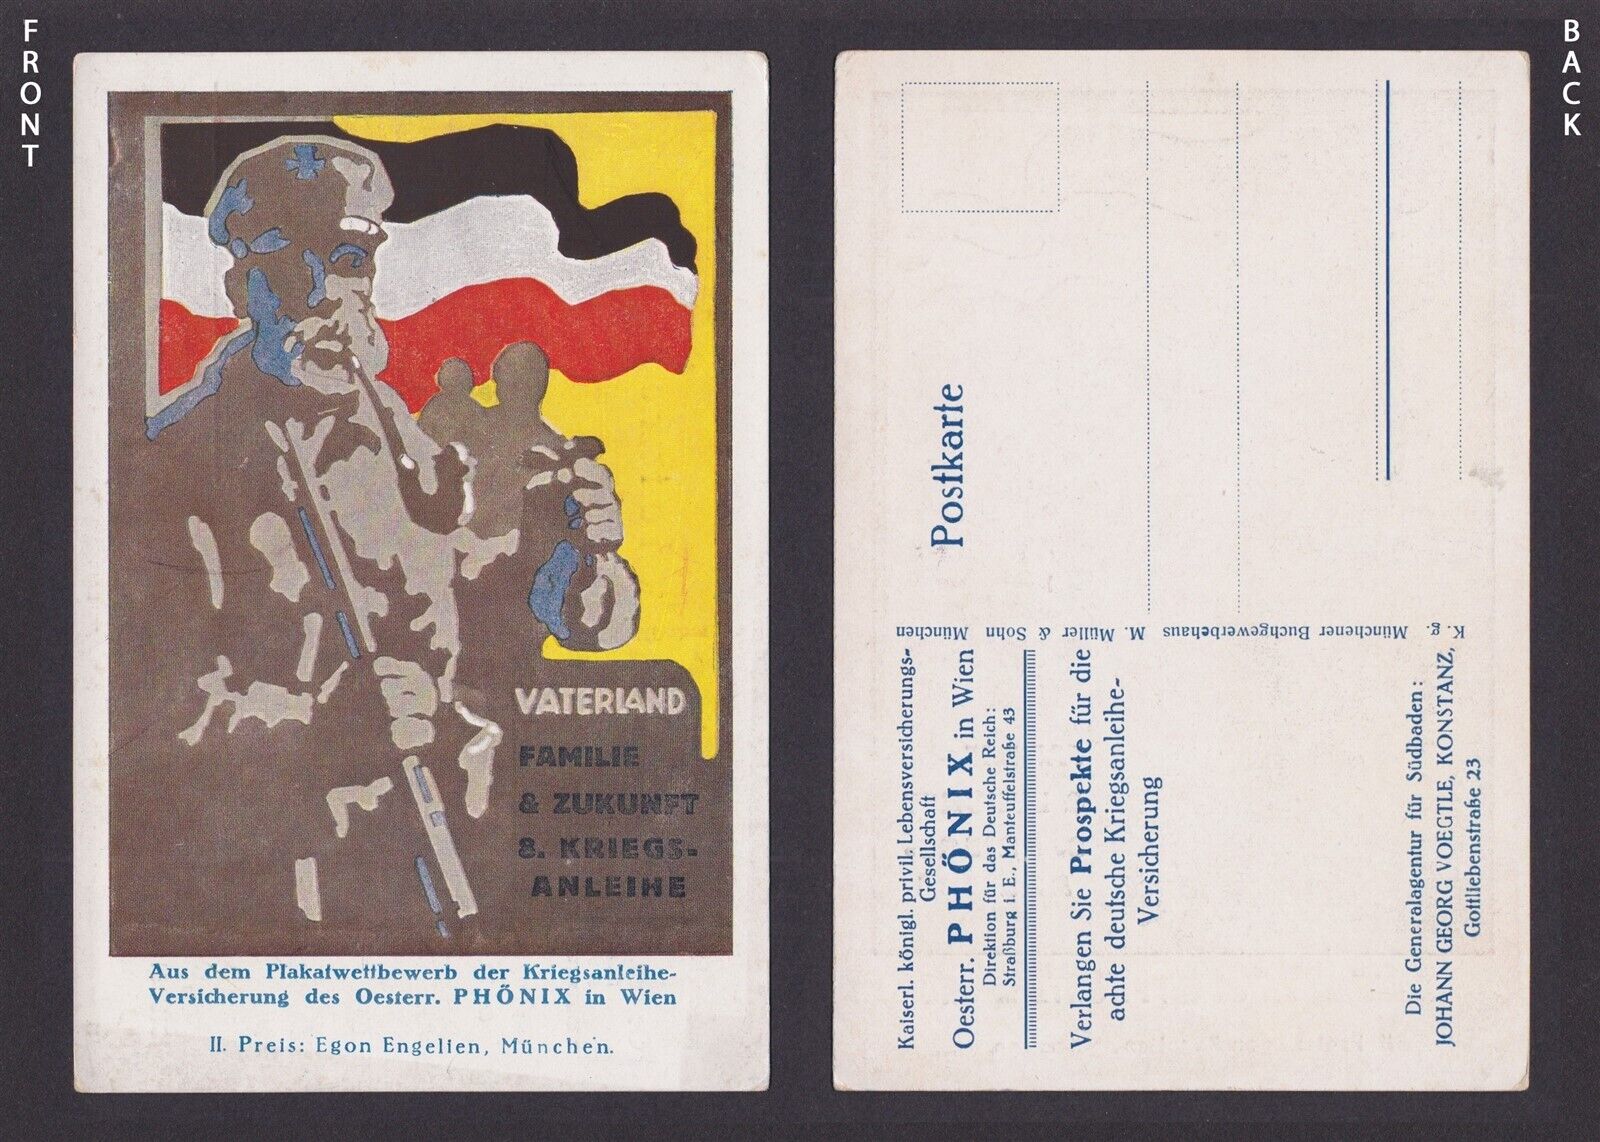 Postcard 1918, WWI Propaganda, Vaterland, Familie & Zukunft